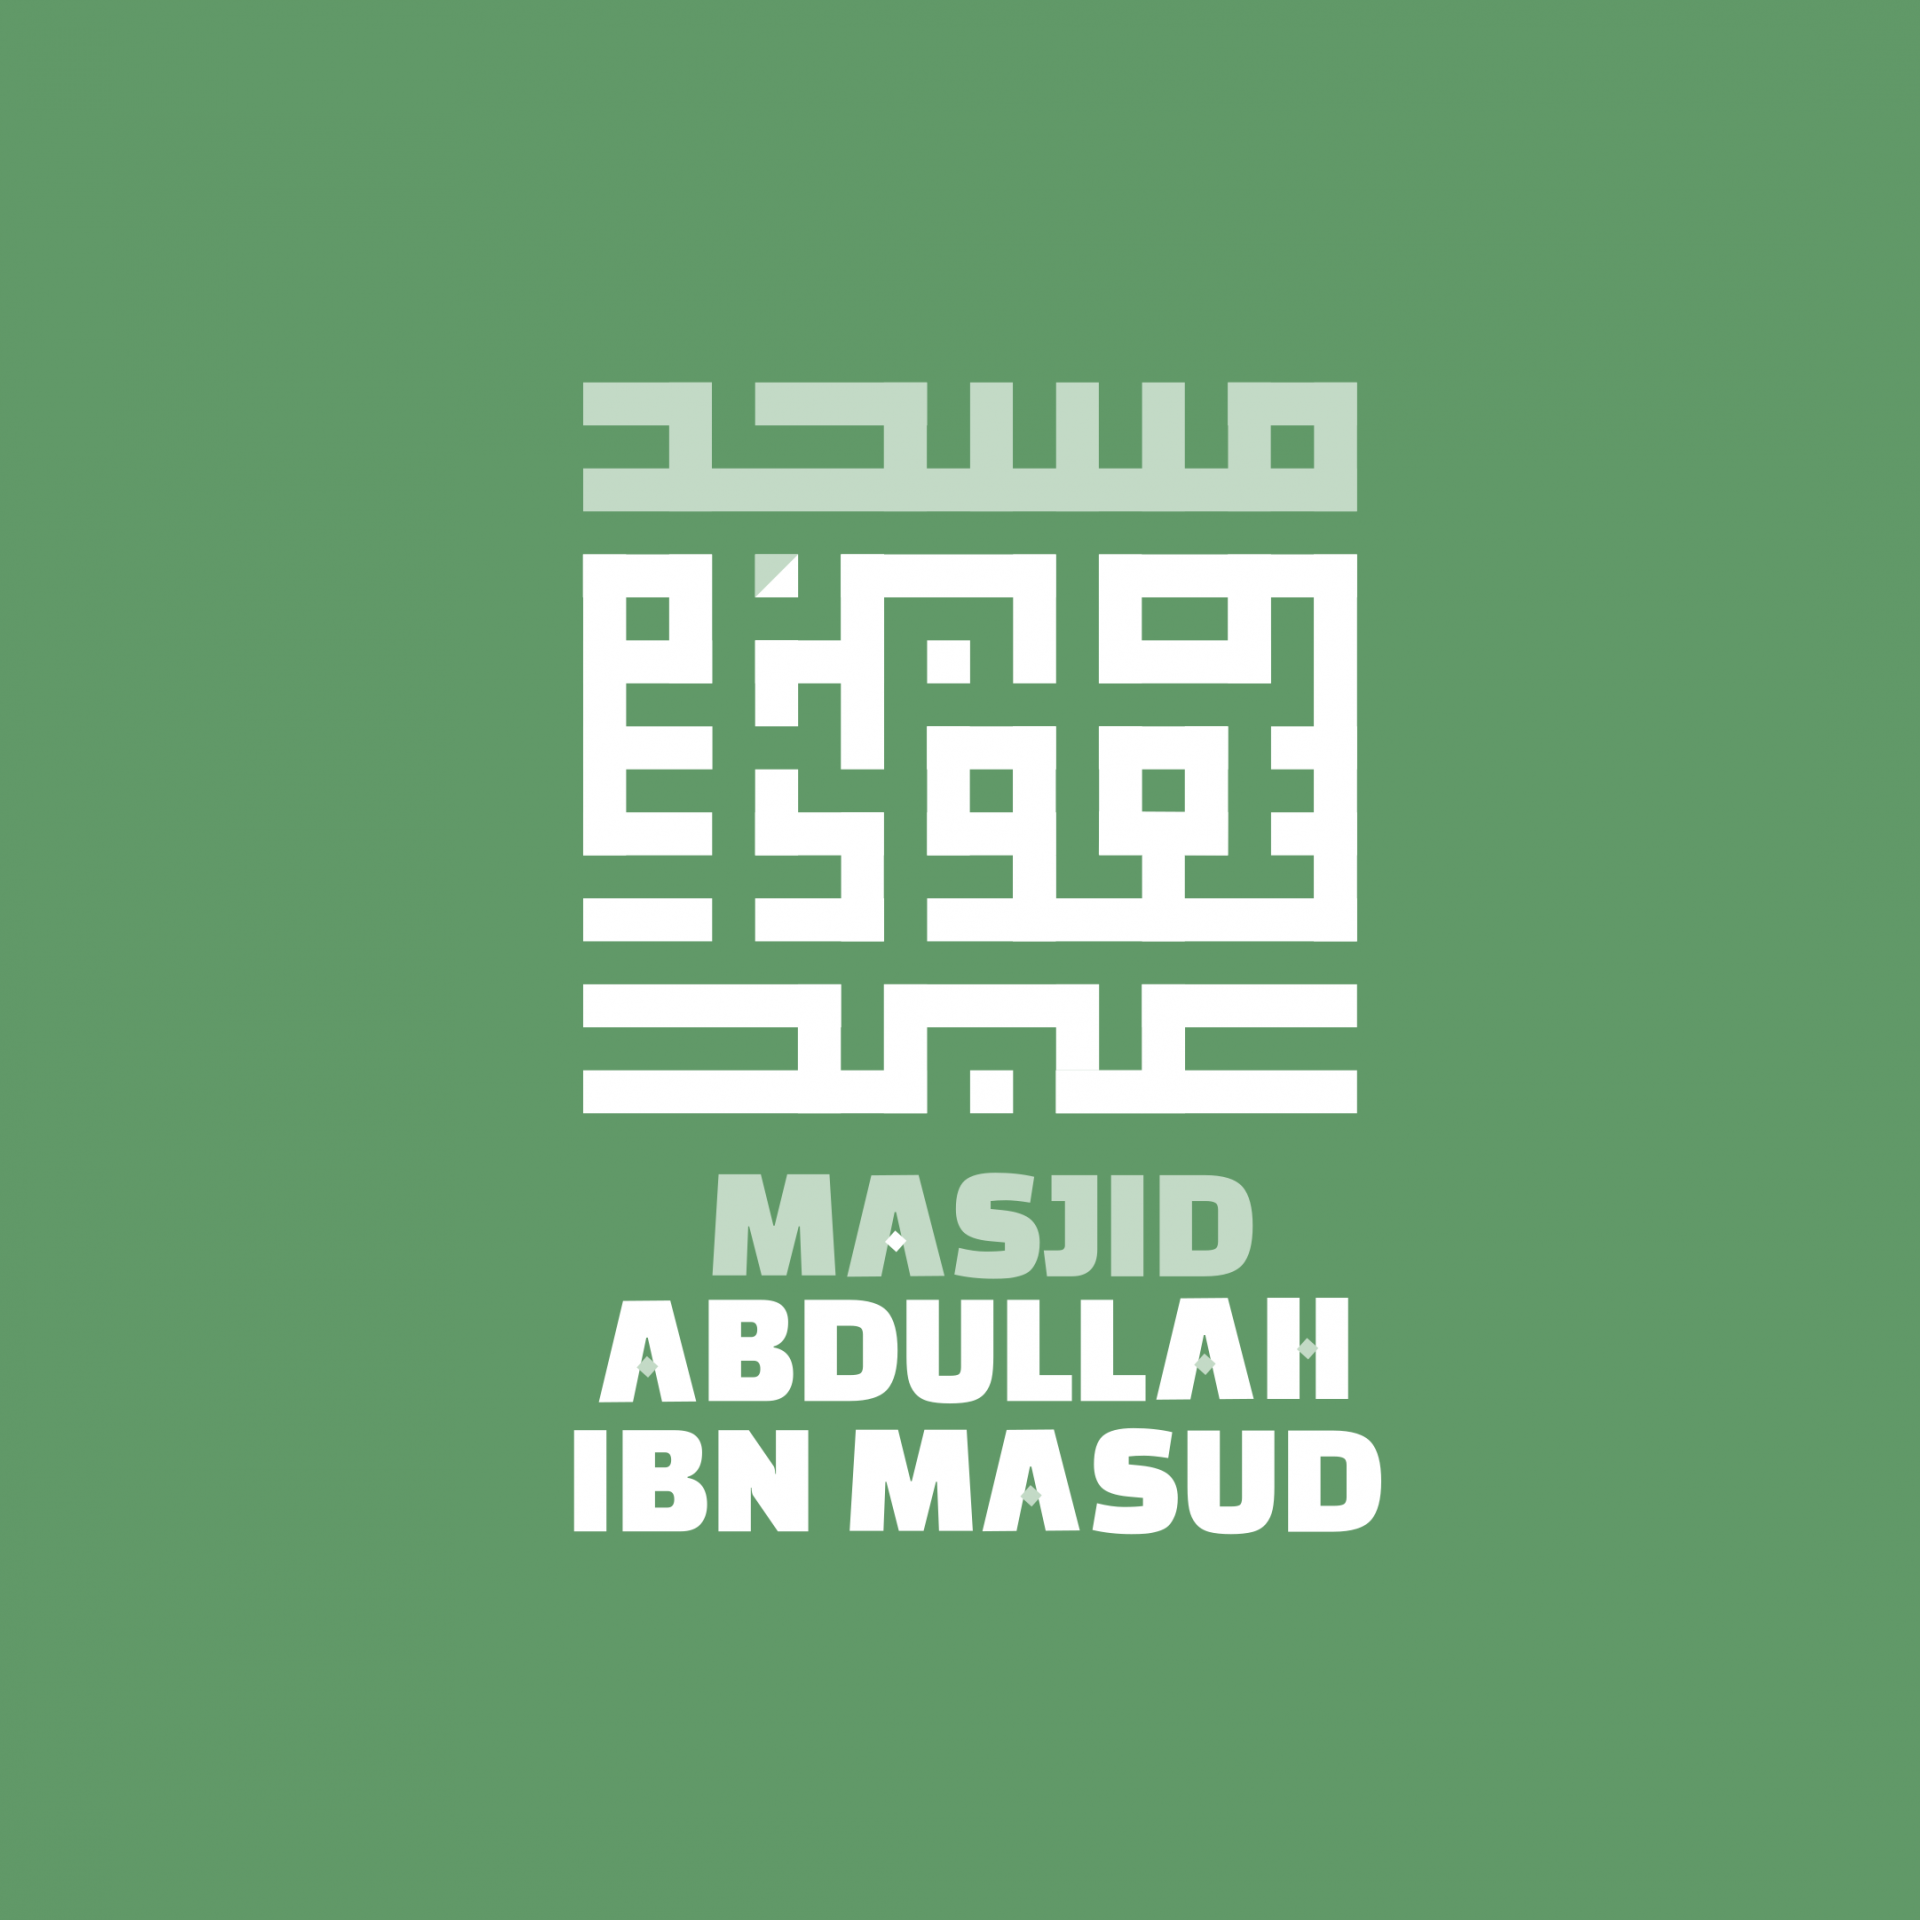 Masjid Abdullah ibn Masud